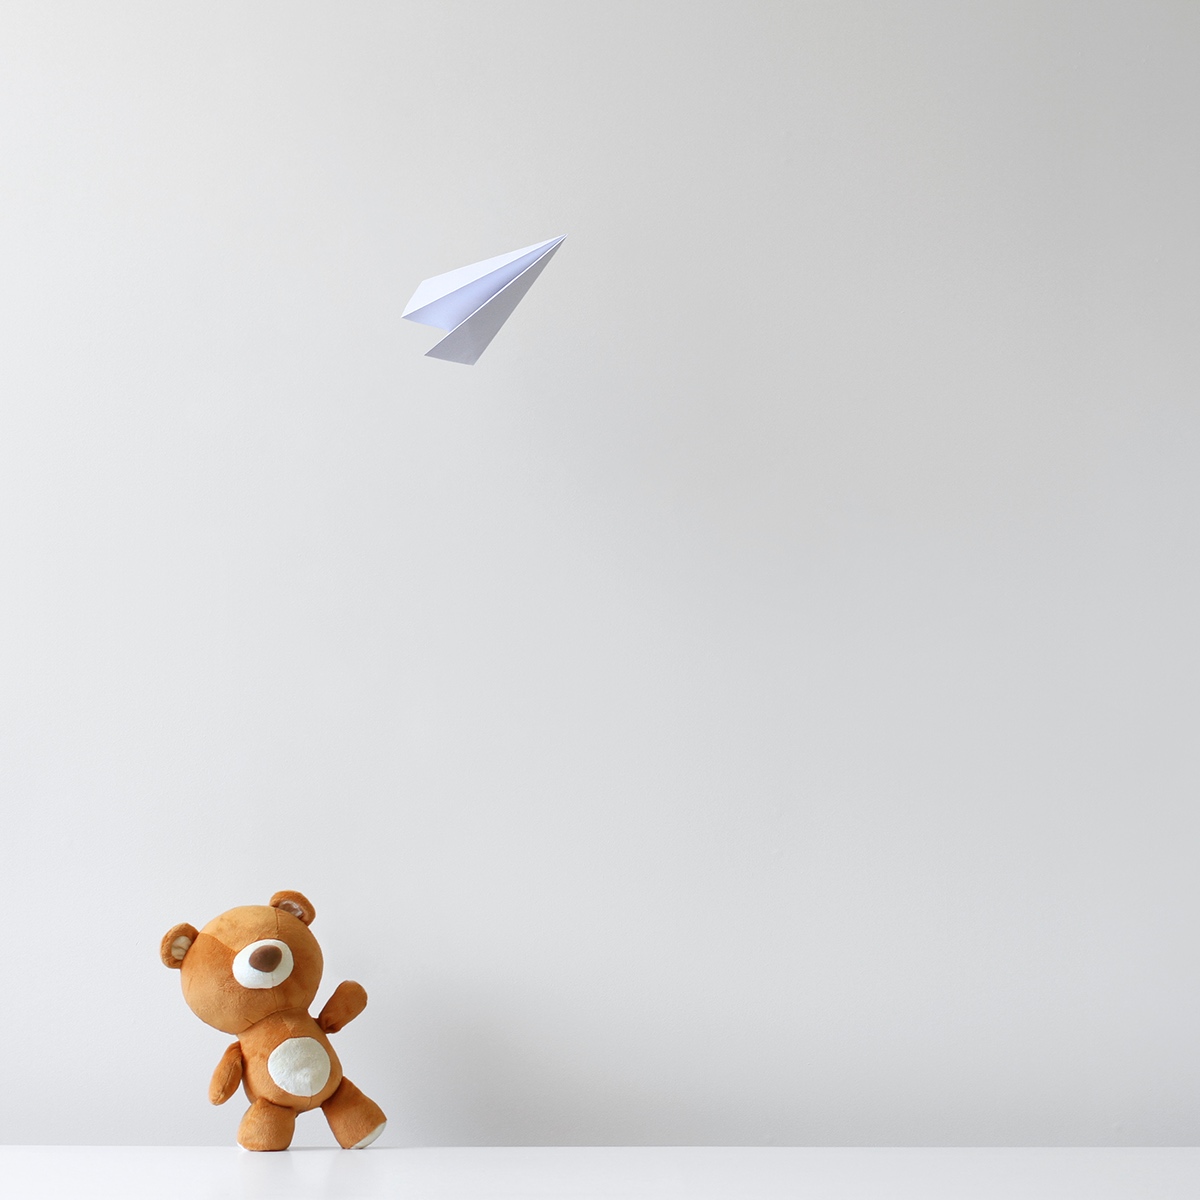 plush toy kids childrens parenting teddy bear elephant pegasus horse conceptual airplane paper balloon product idea